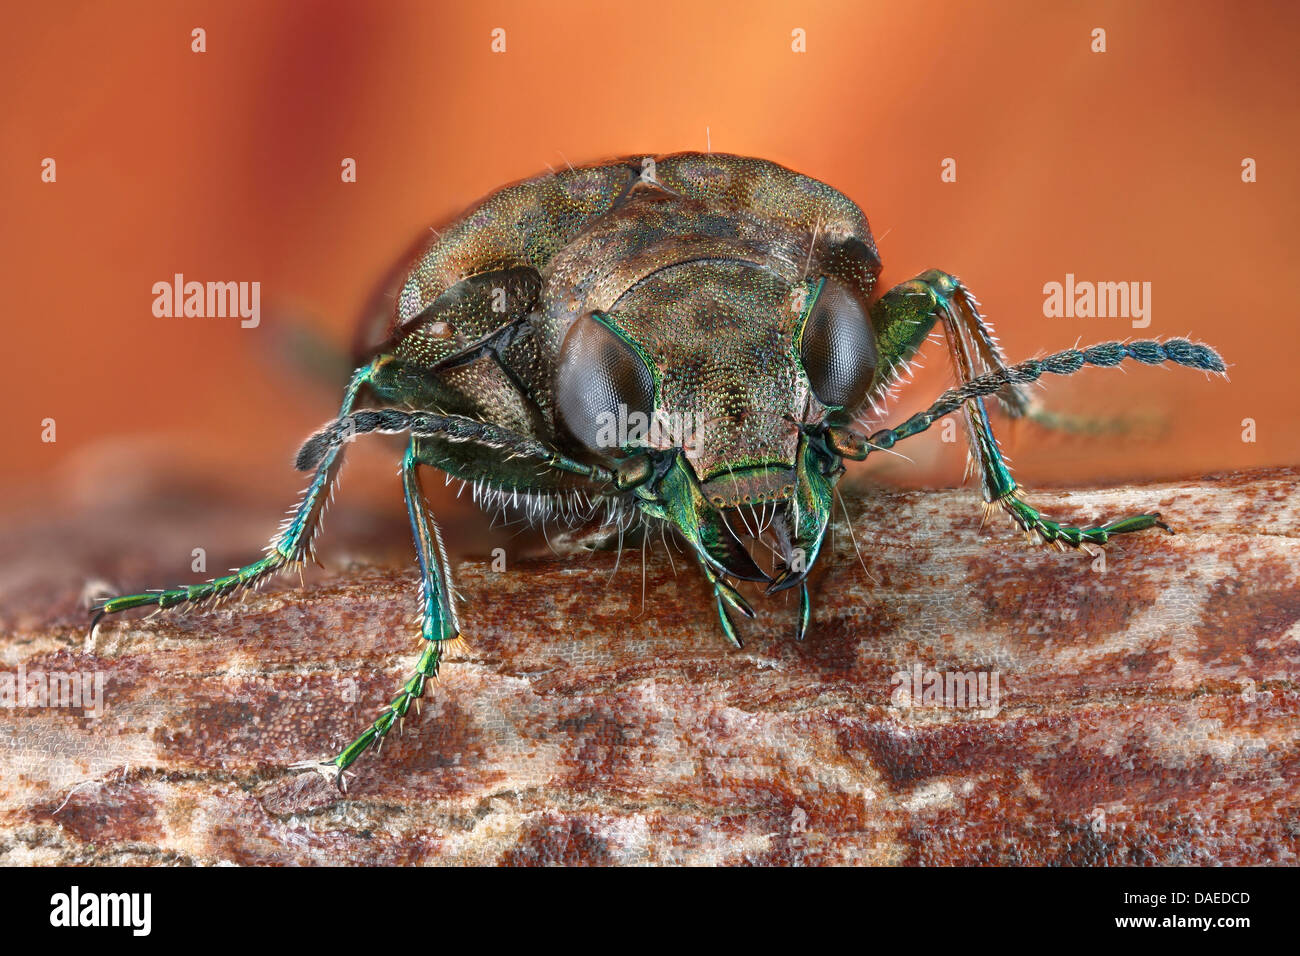 lesser wetland ground beetles (Elaphrus riparius), sitting on a branch, Germany, Thuringia Stock Photo